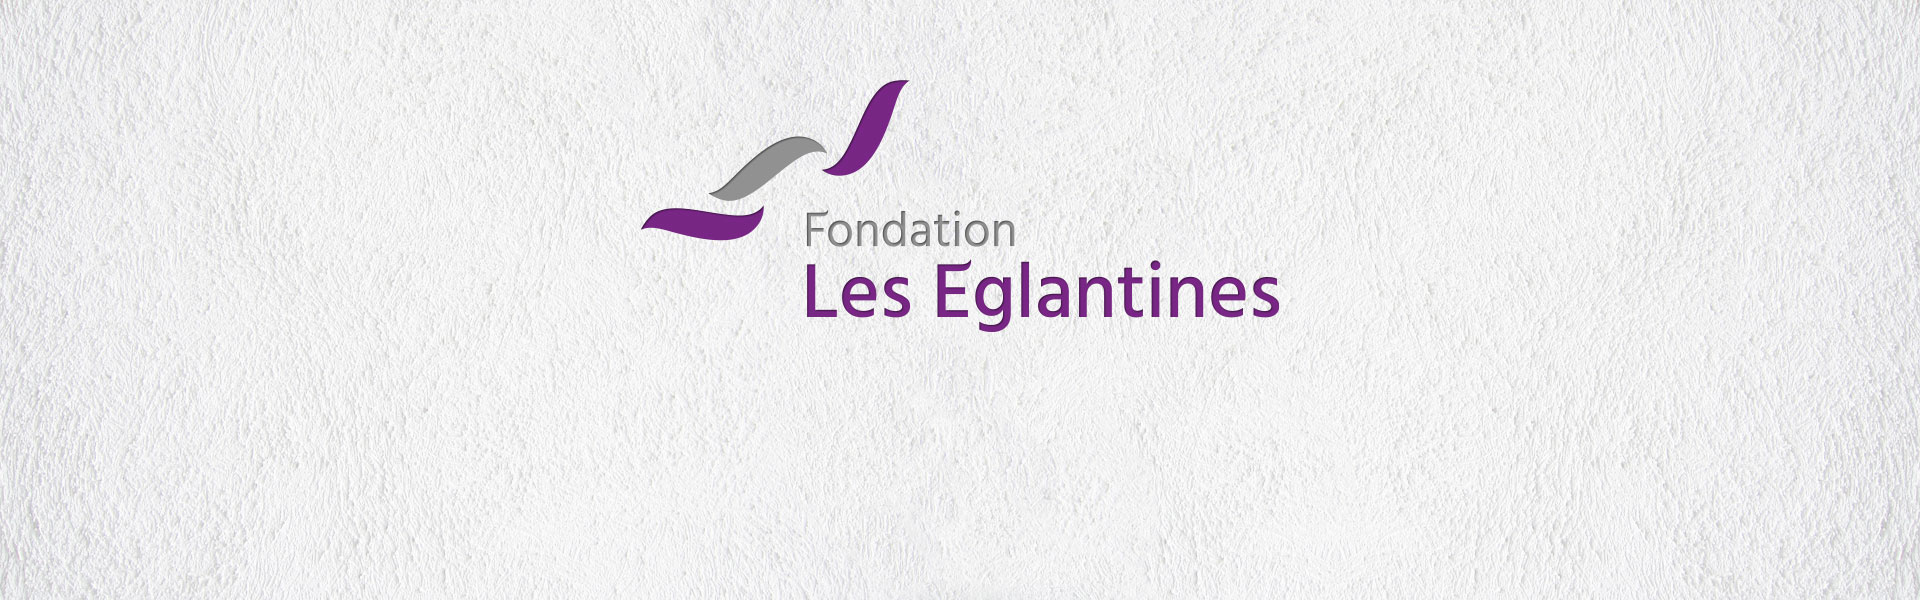 Loge de la Fondation Les Eglantines